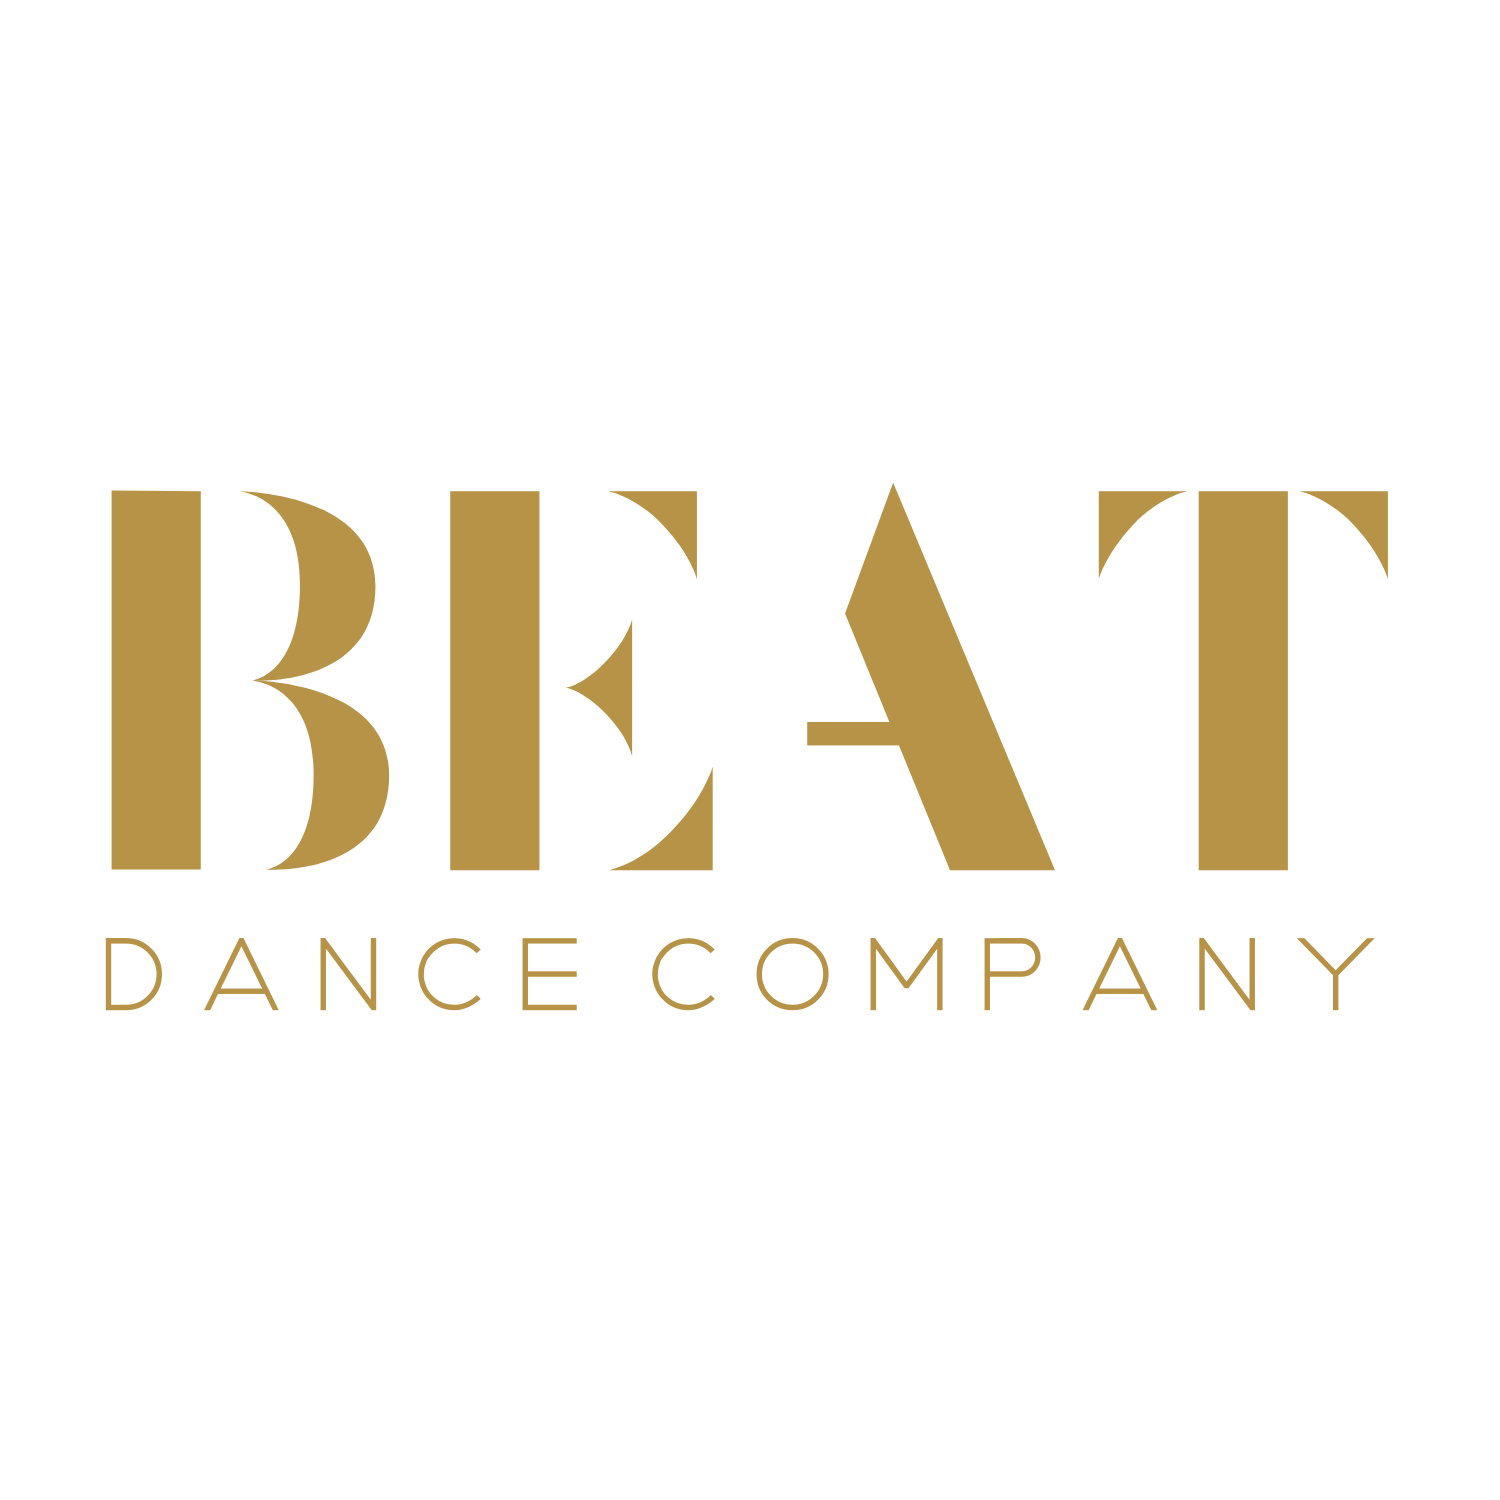 Beat Dance Company